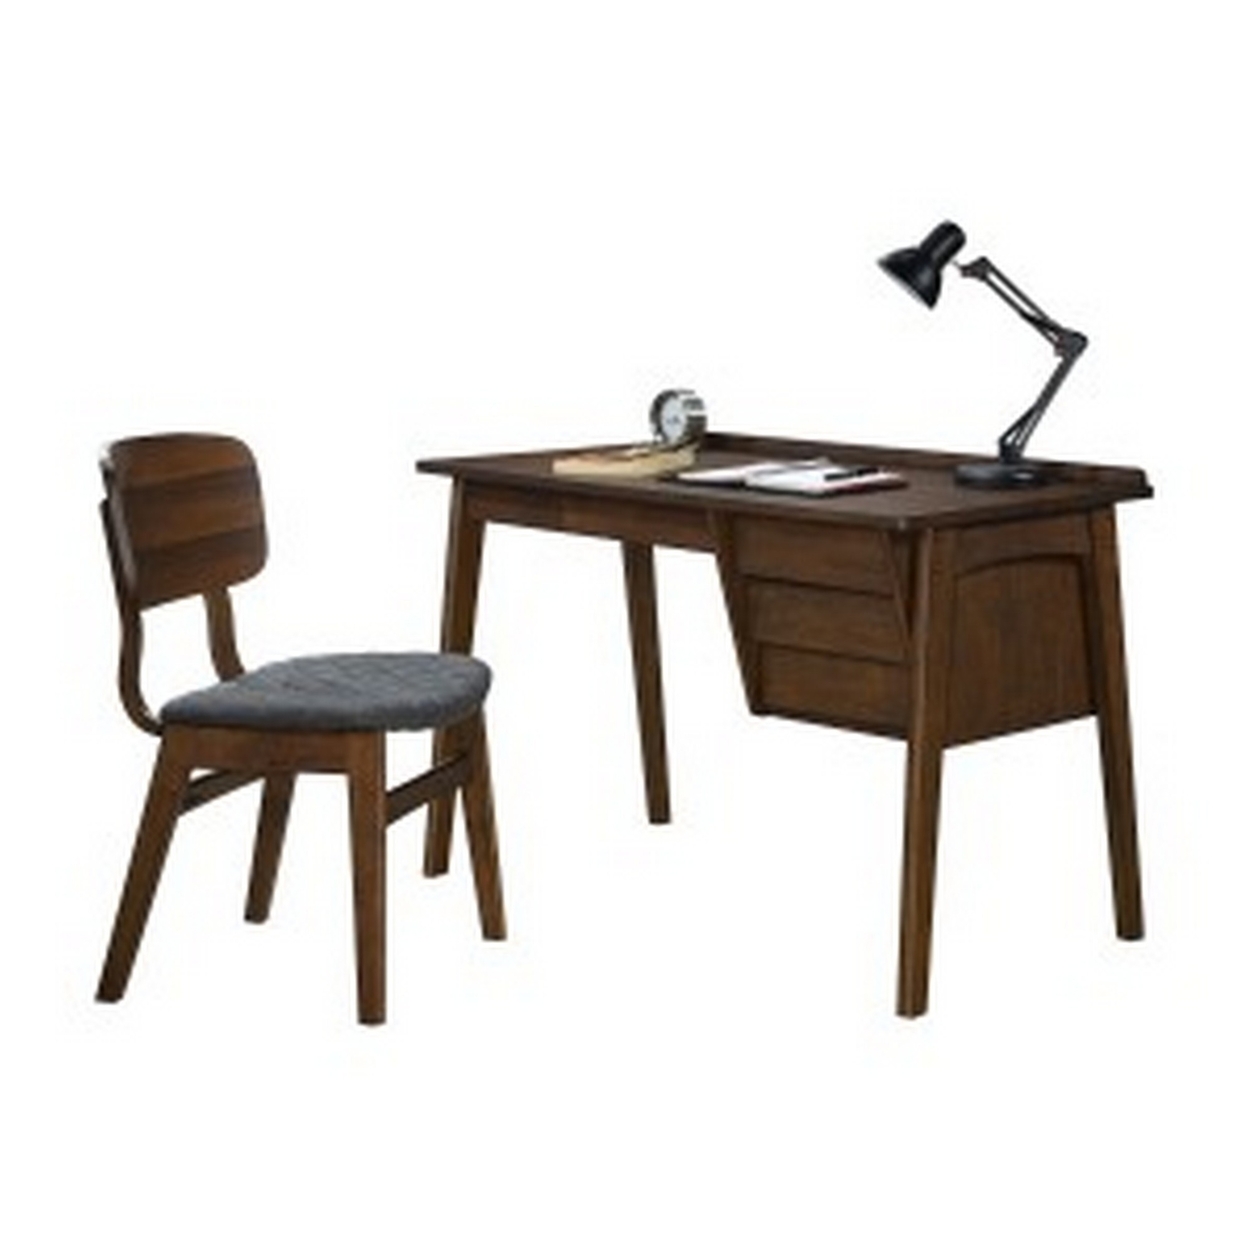 Modern Writing Desk And Chair Set, 3 Drawers, Cushioned Seat, Gray Fabric- Saltoro Sherpi